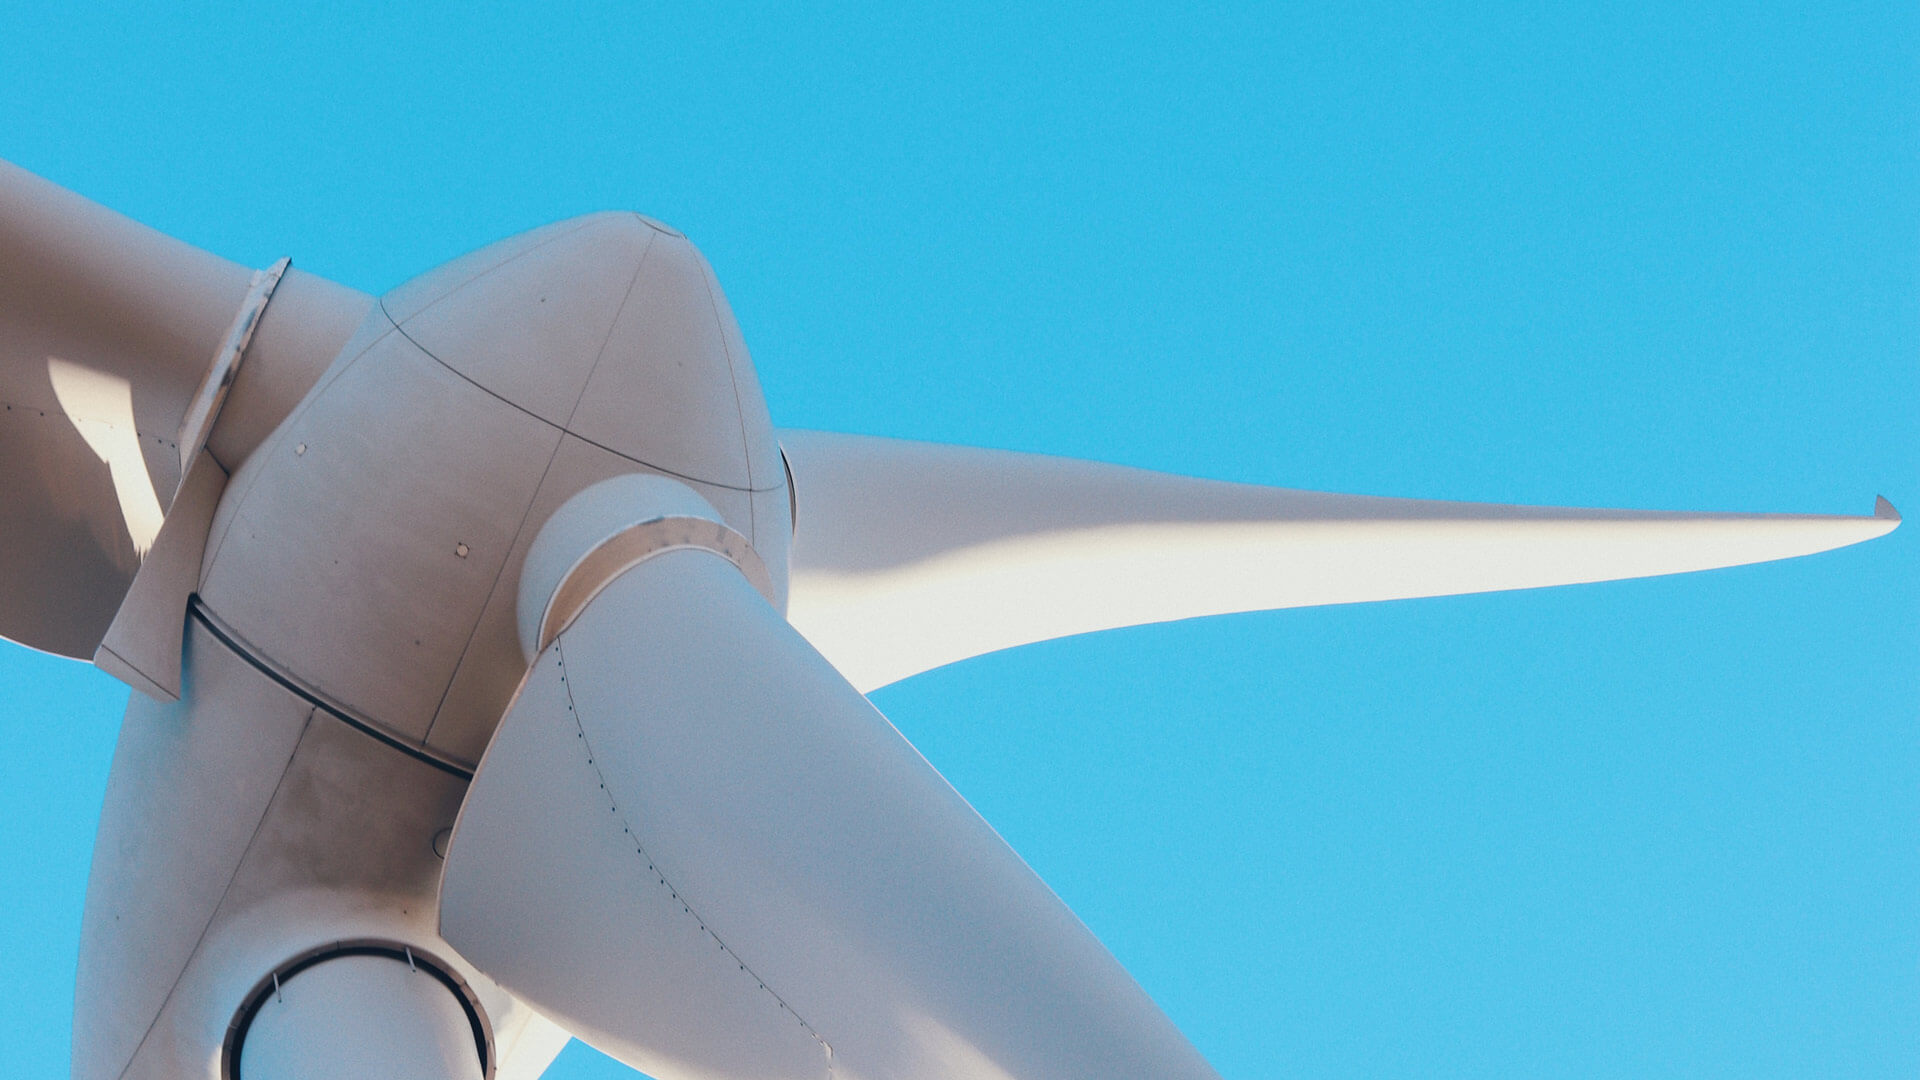 A close up image of white wind turbine blades against a cerulean blue sky.